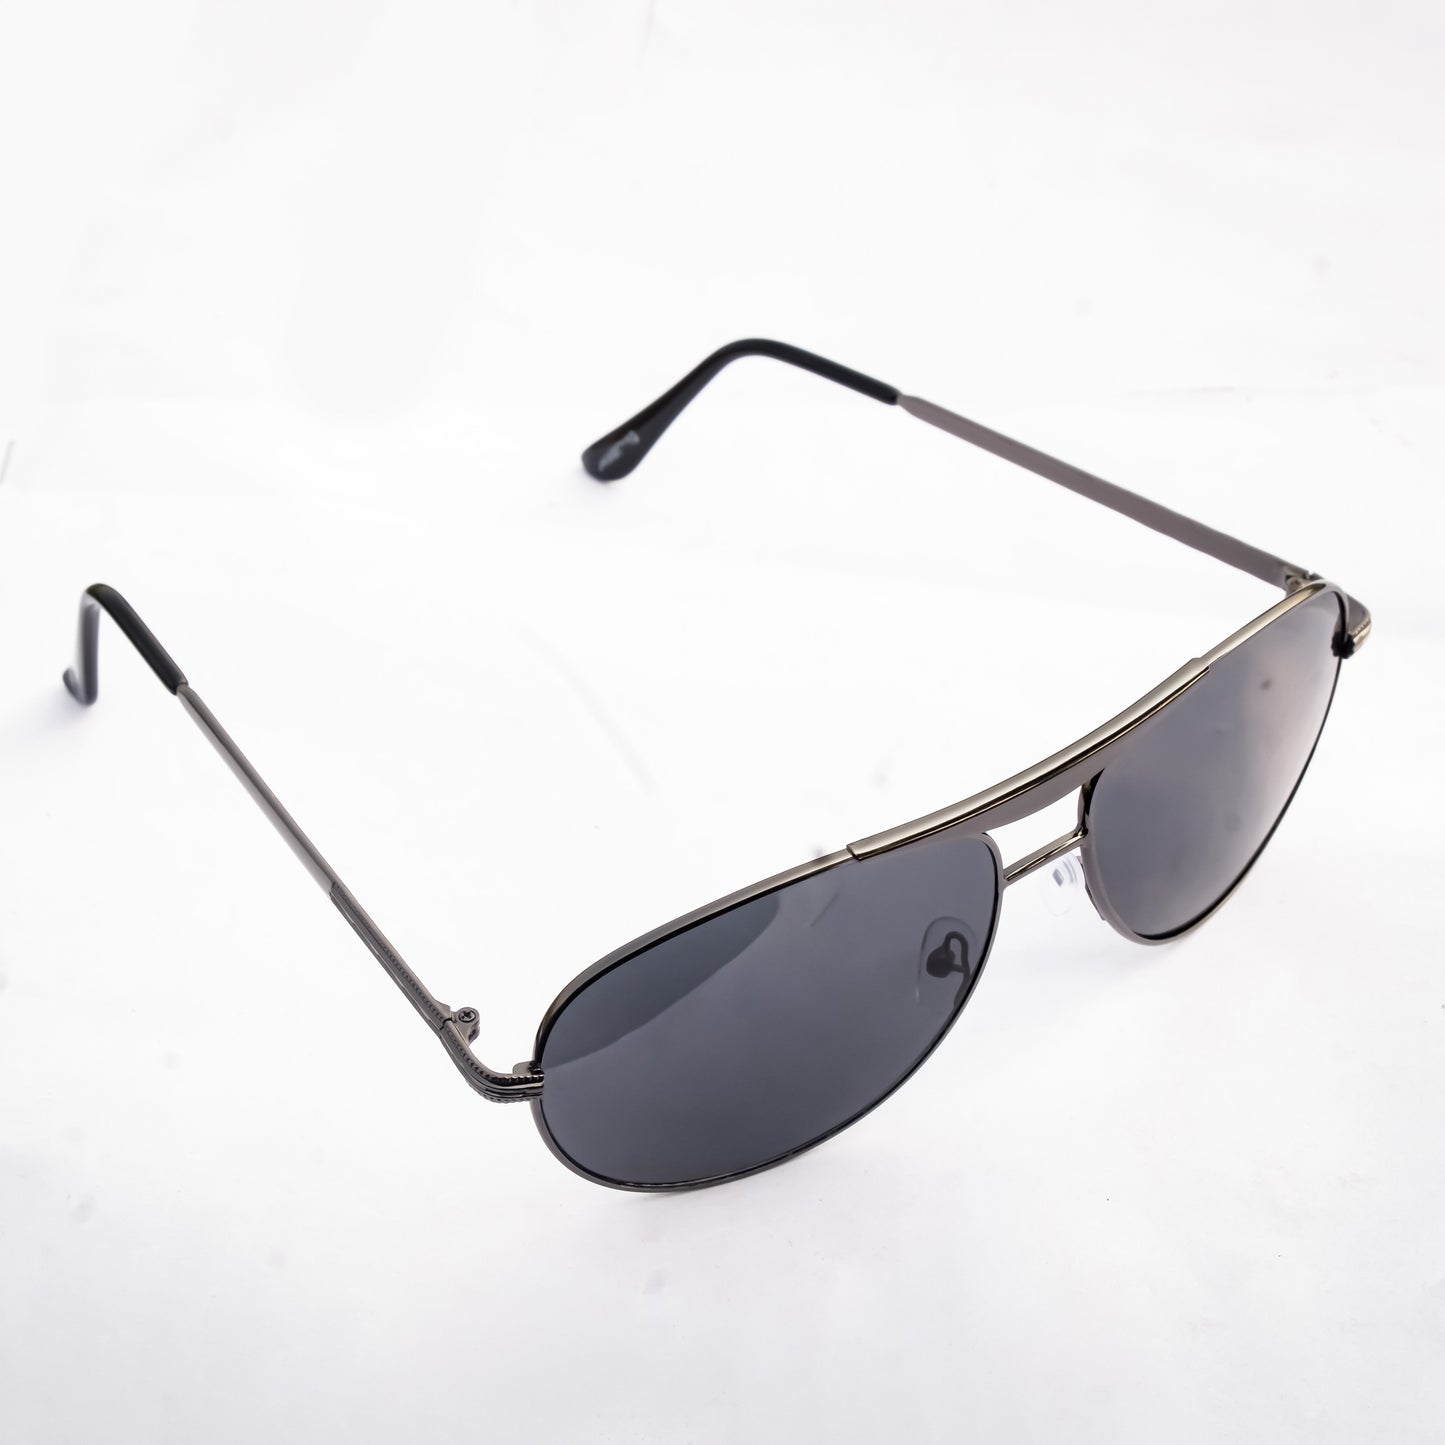 Jiebo Black Classic Aviator Sunglasses